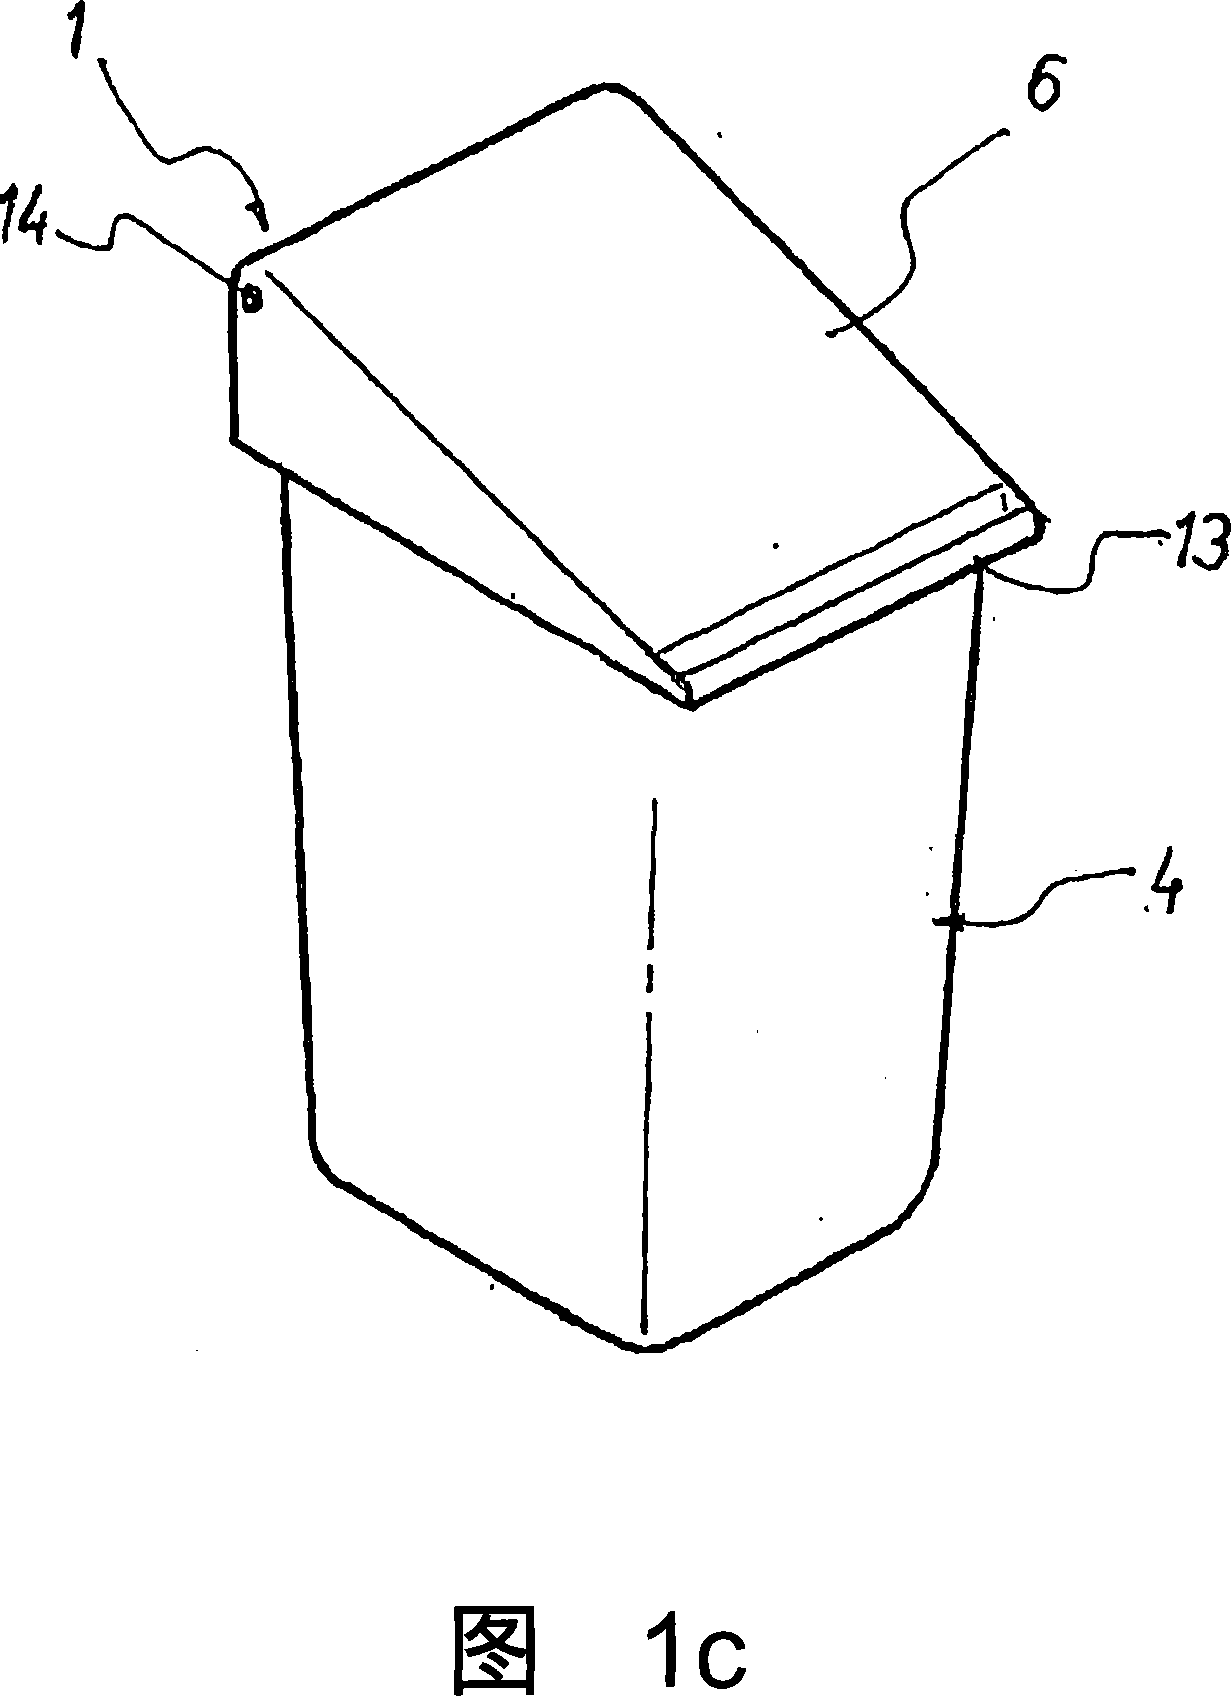 A bin compactor